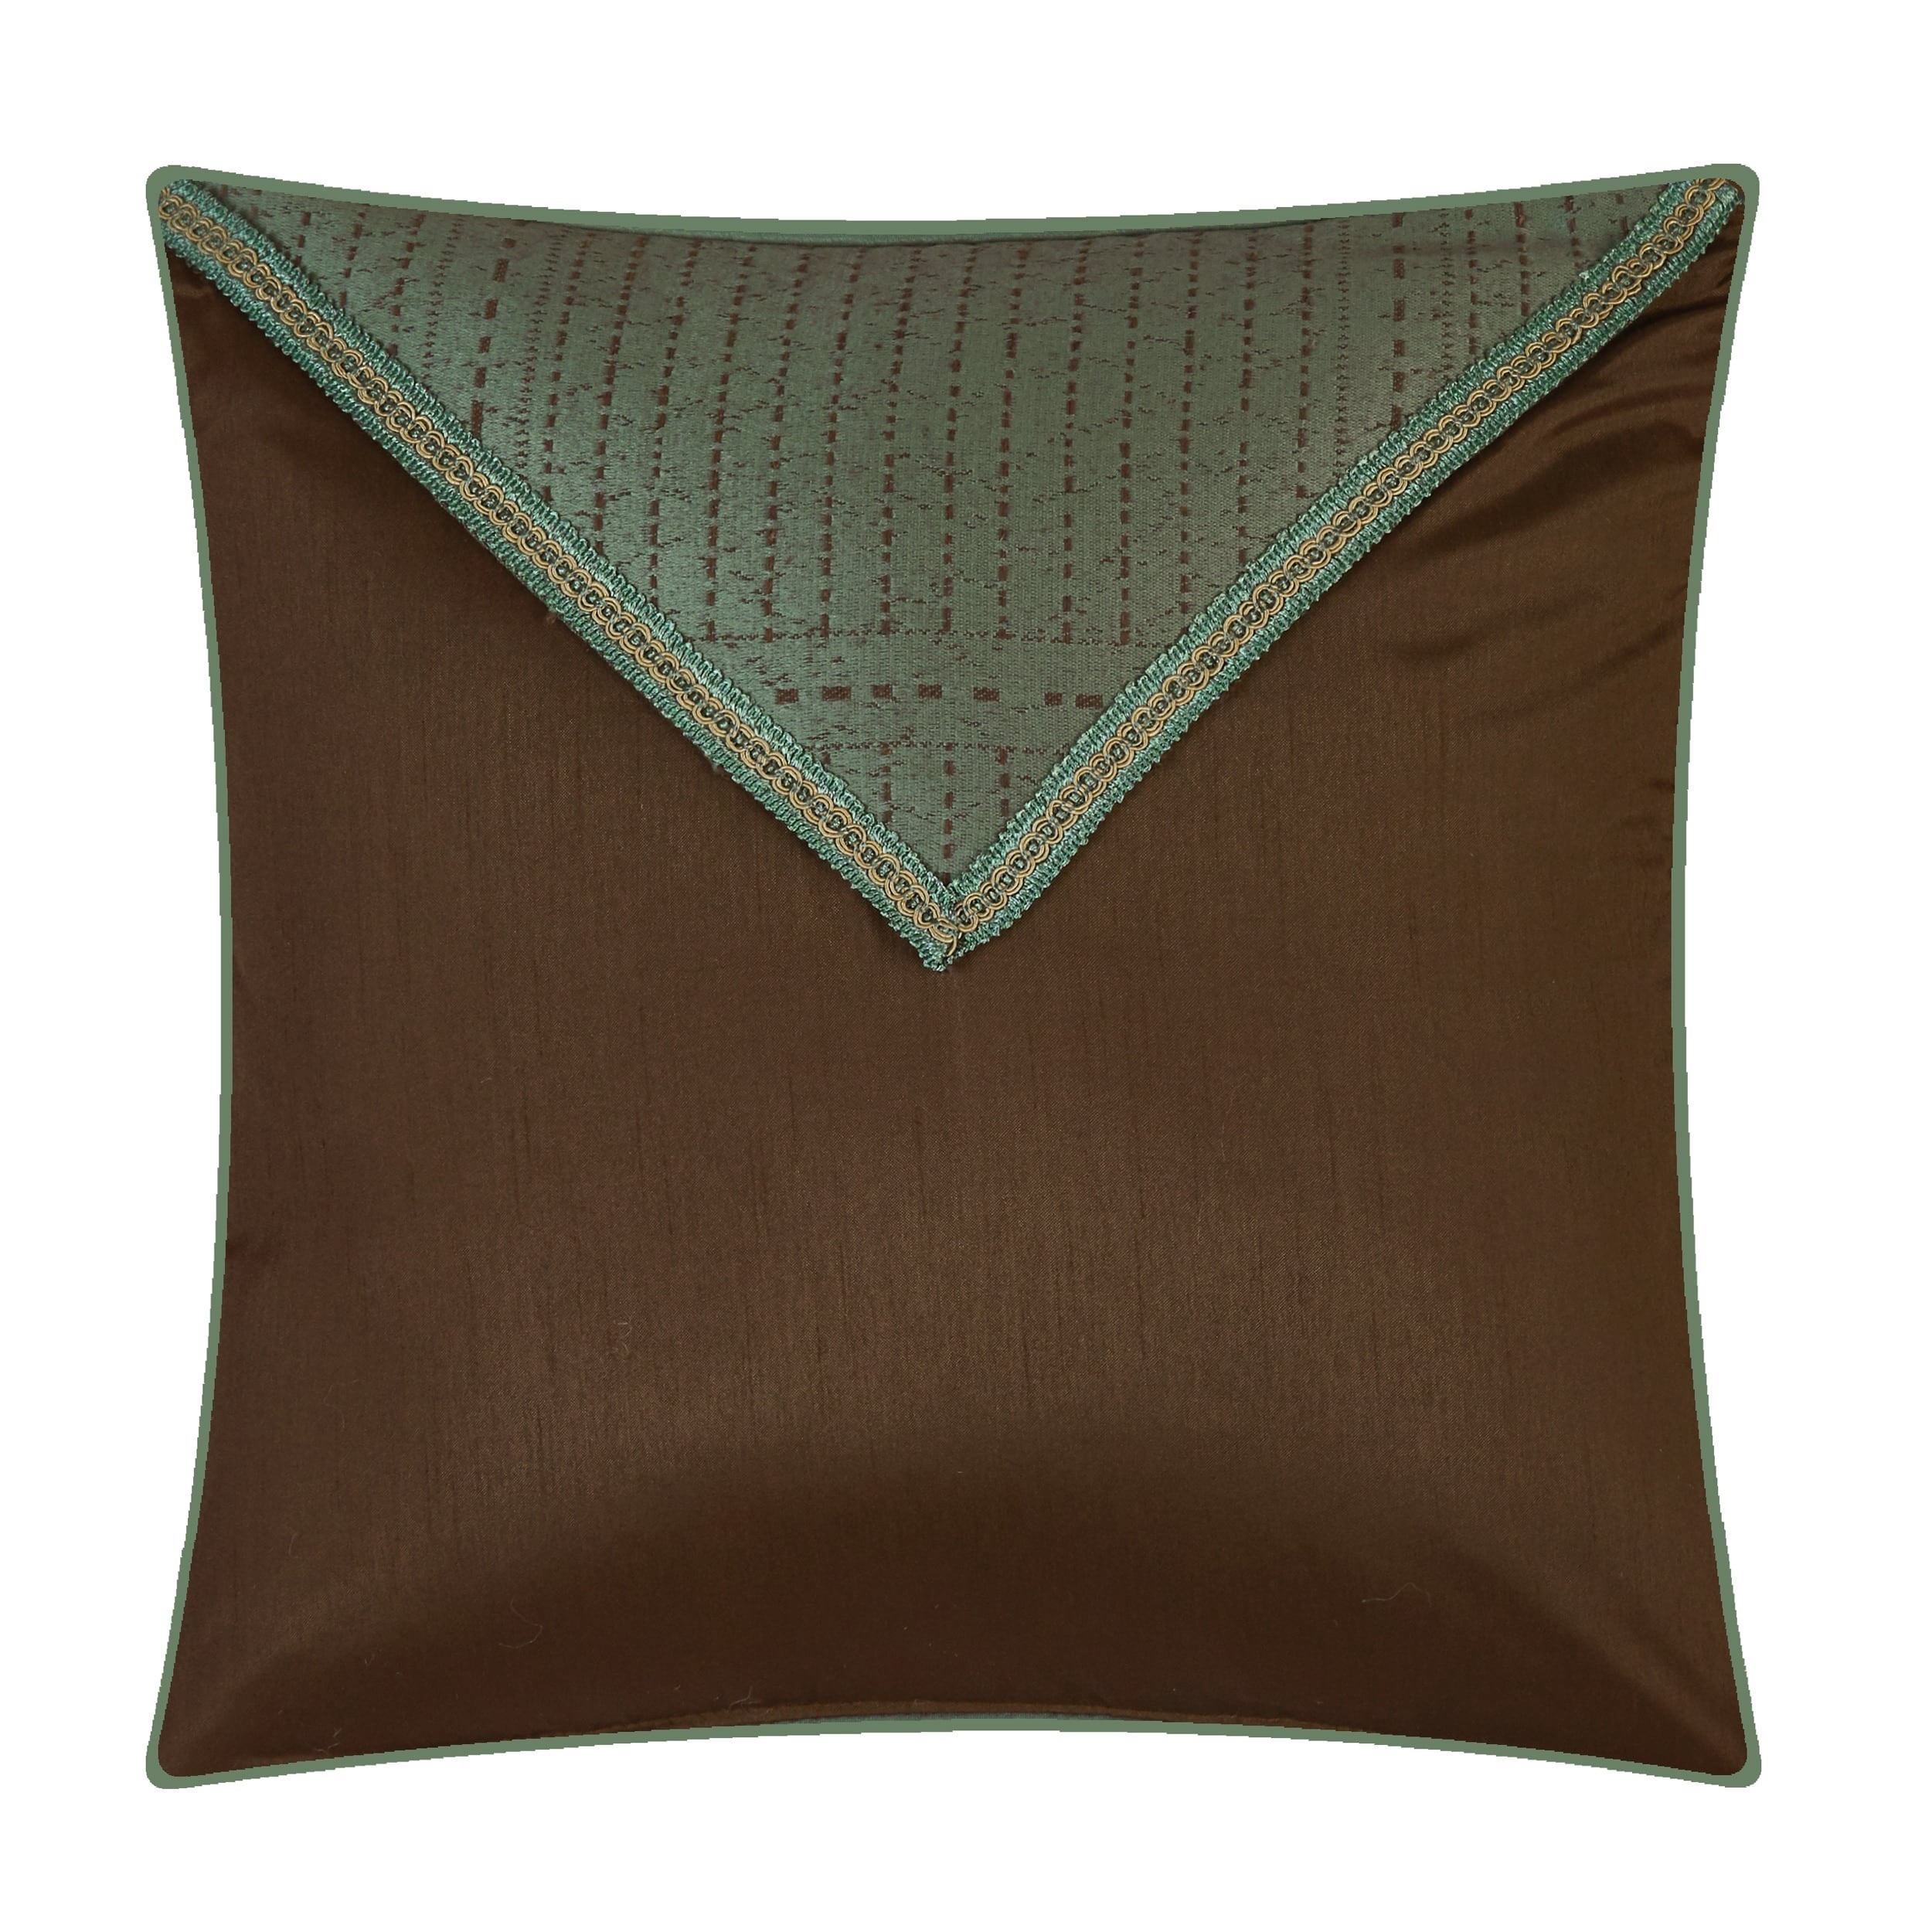 Nanshing Tobey 7-Piece Bedding Comforter Set, Turquoise, Queen - image 4 of 5